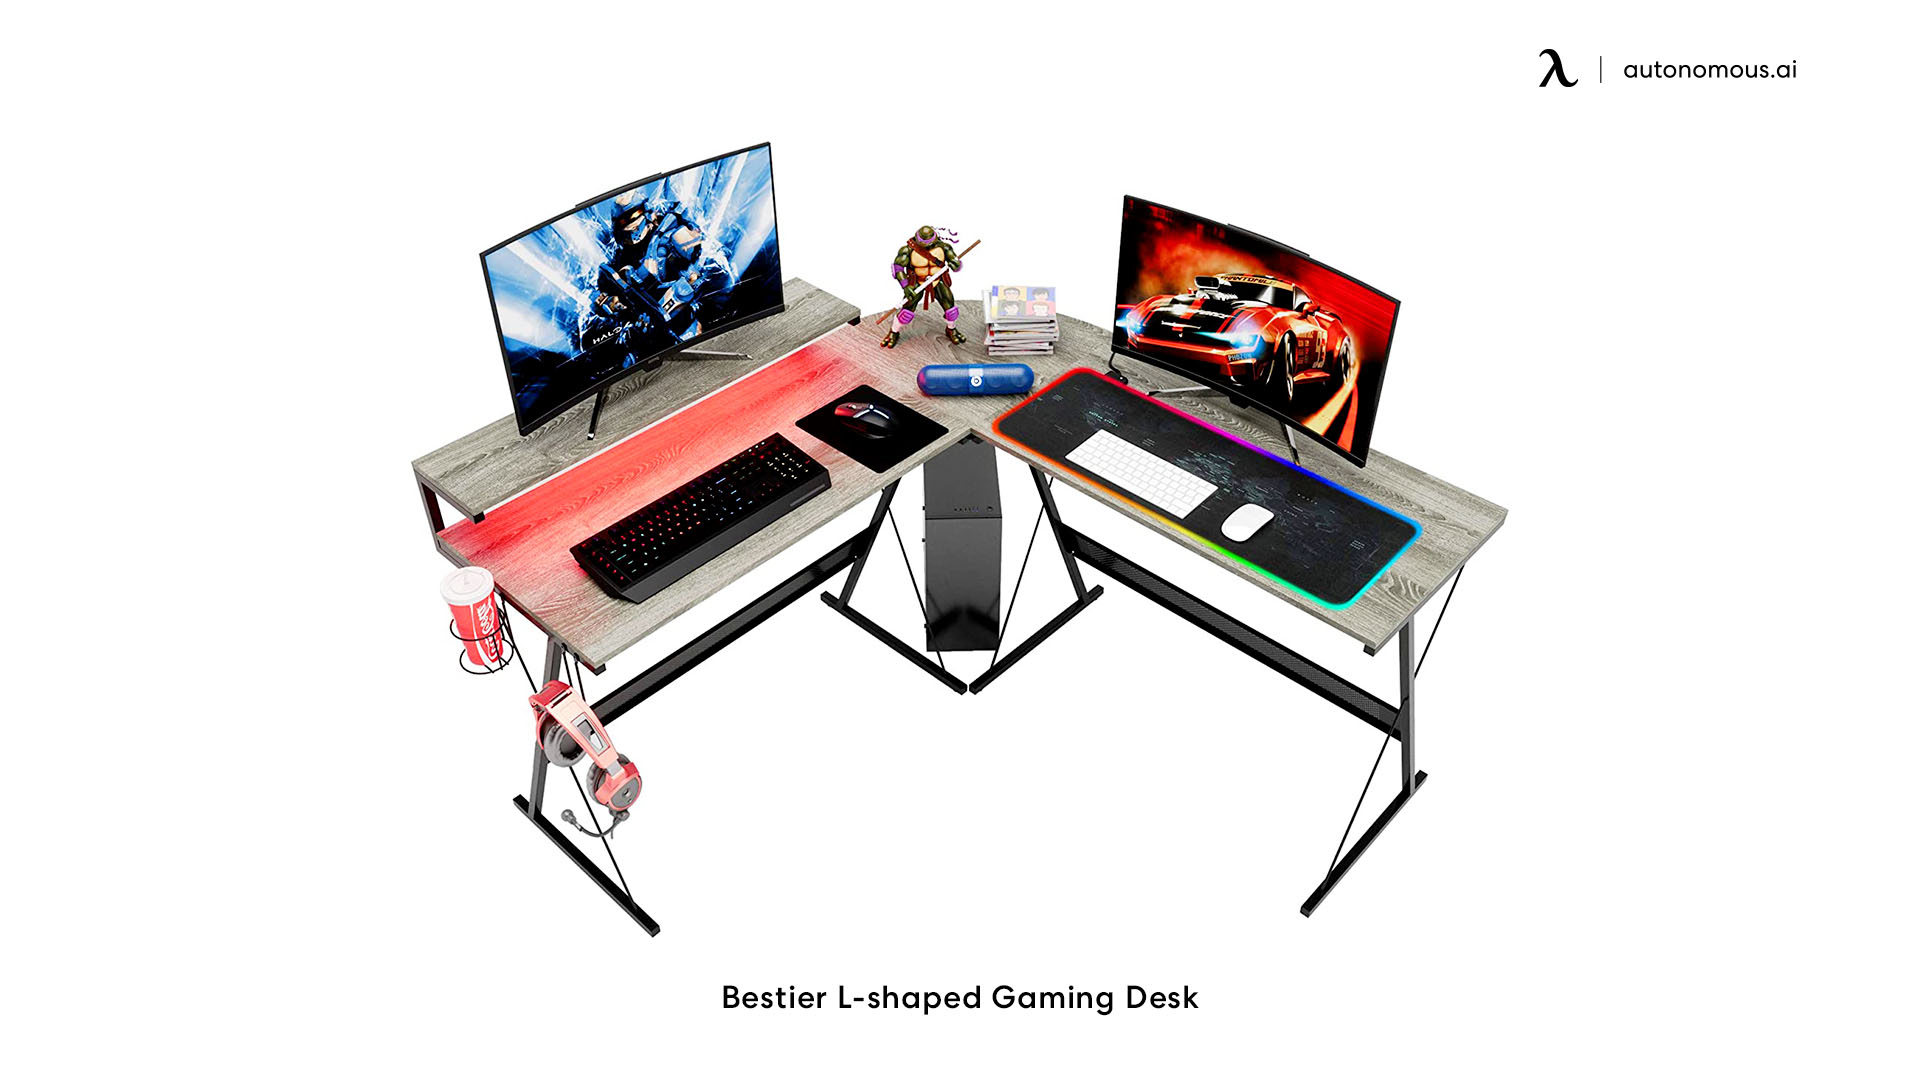 Bestier L-shaped Gaming Desk